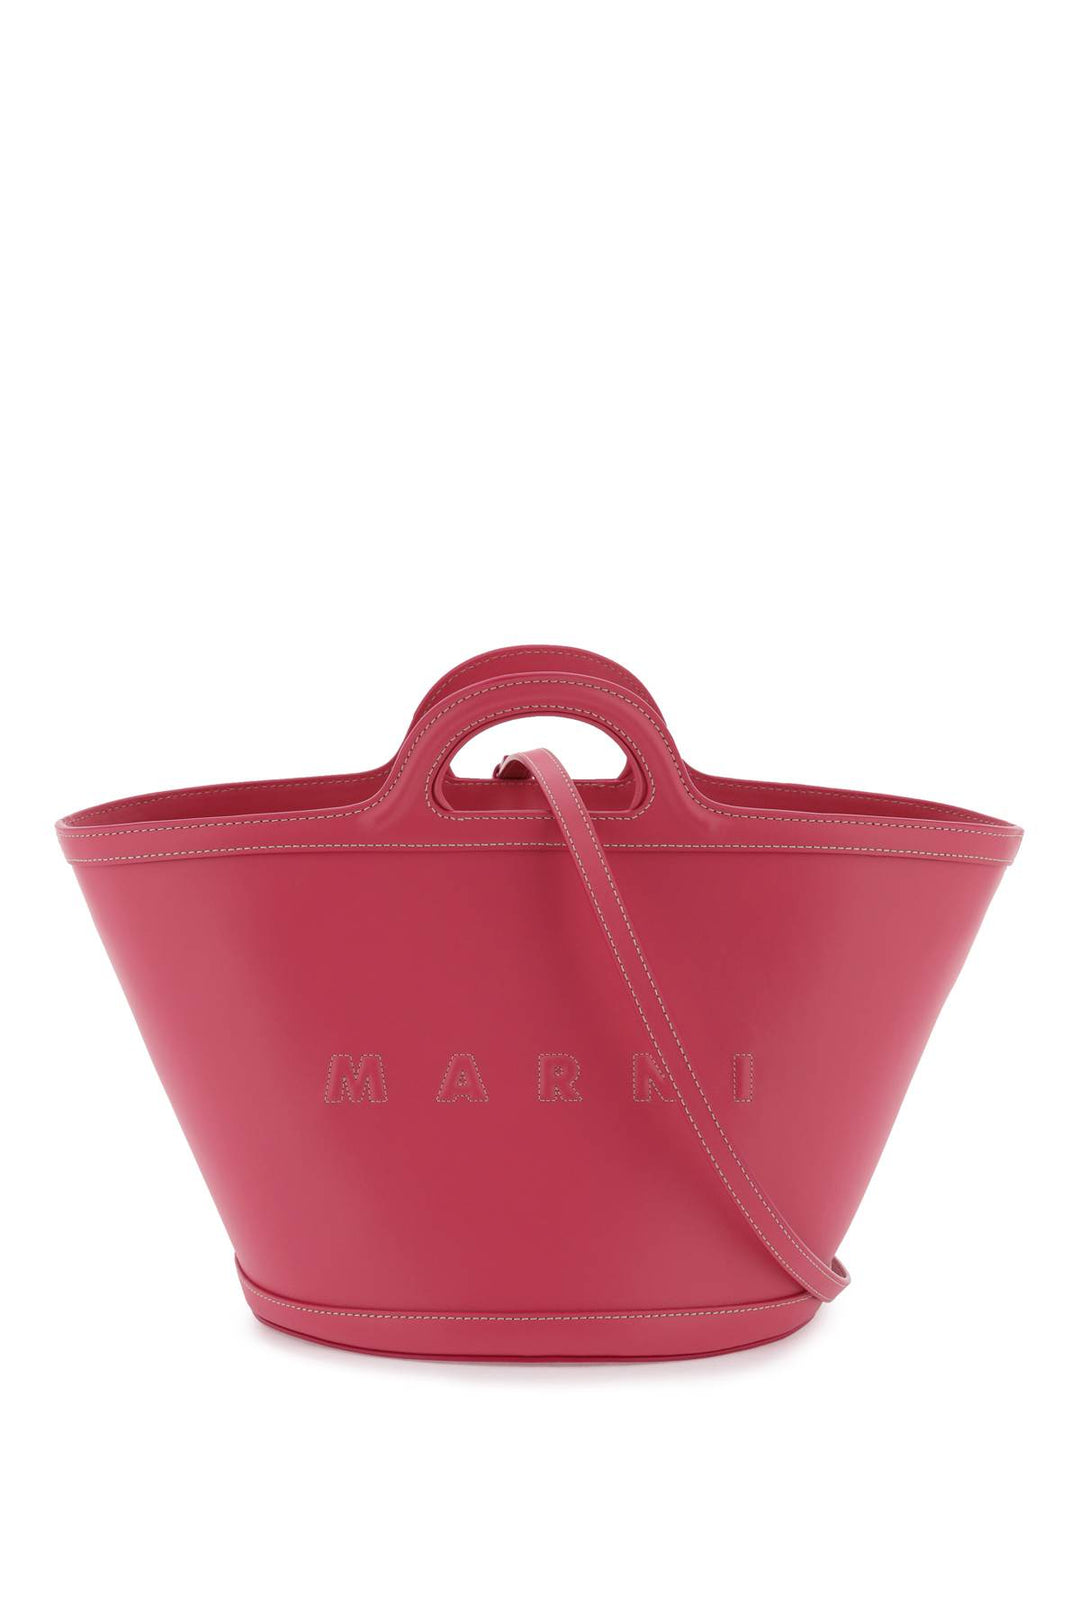 Marni Leather Small Tropicalia Bucket Bag   Rosa